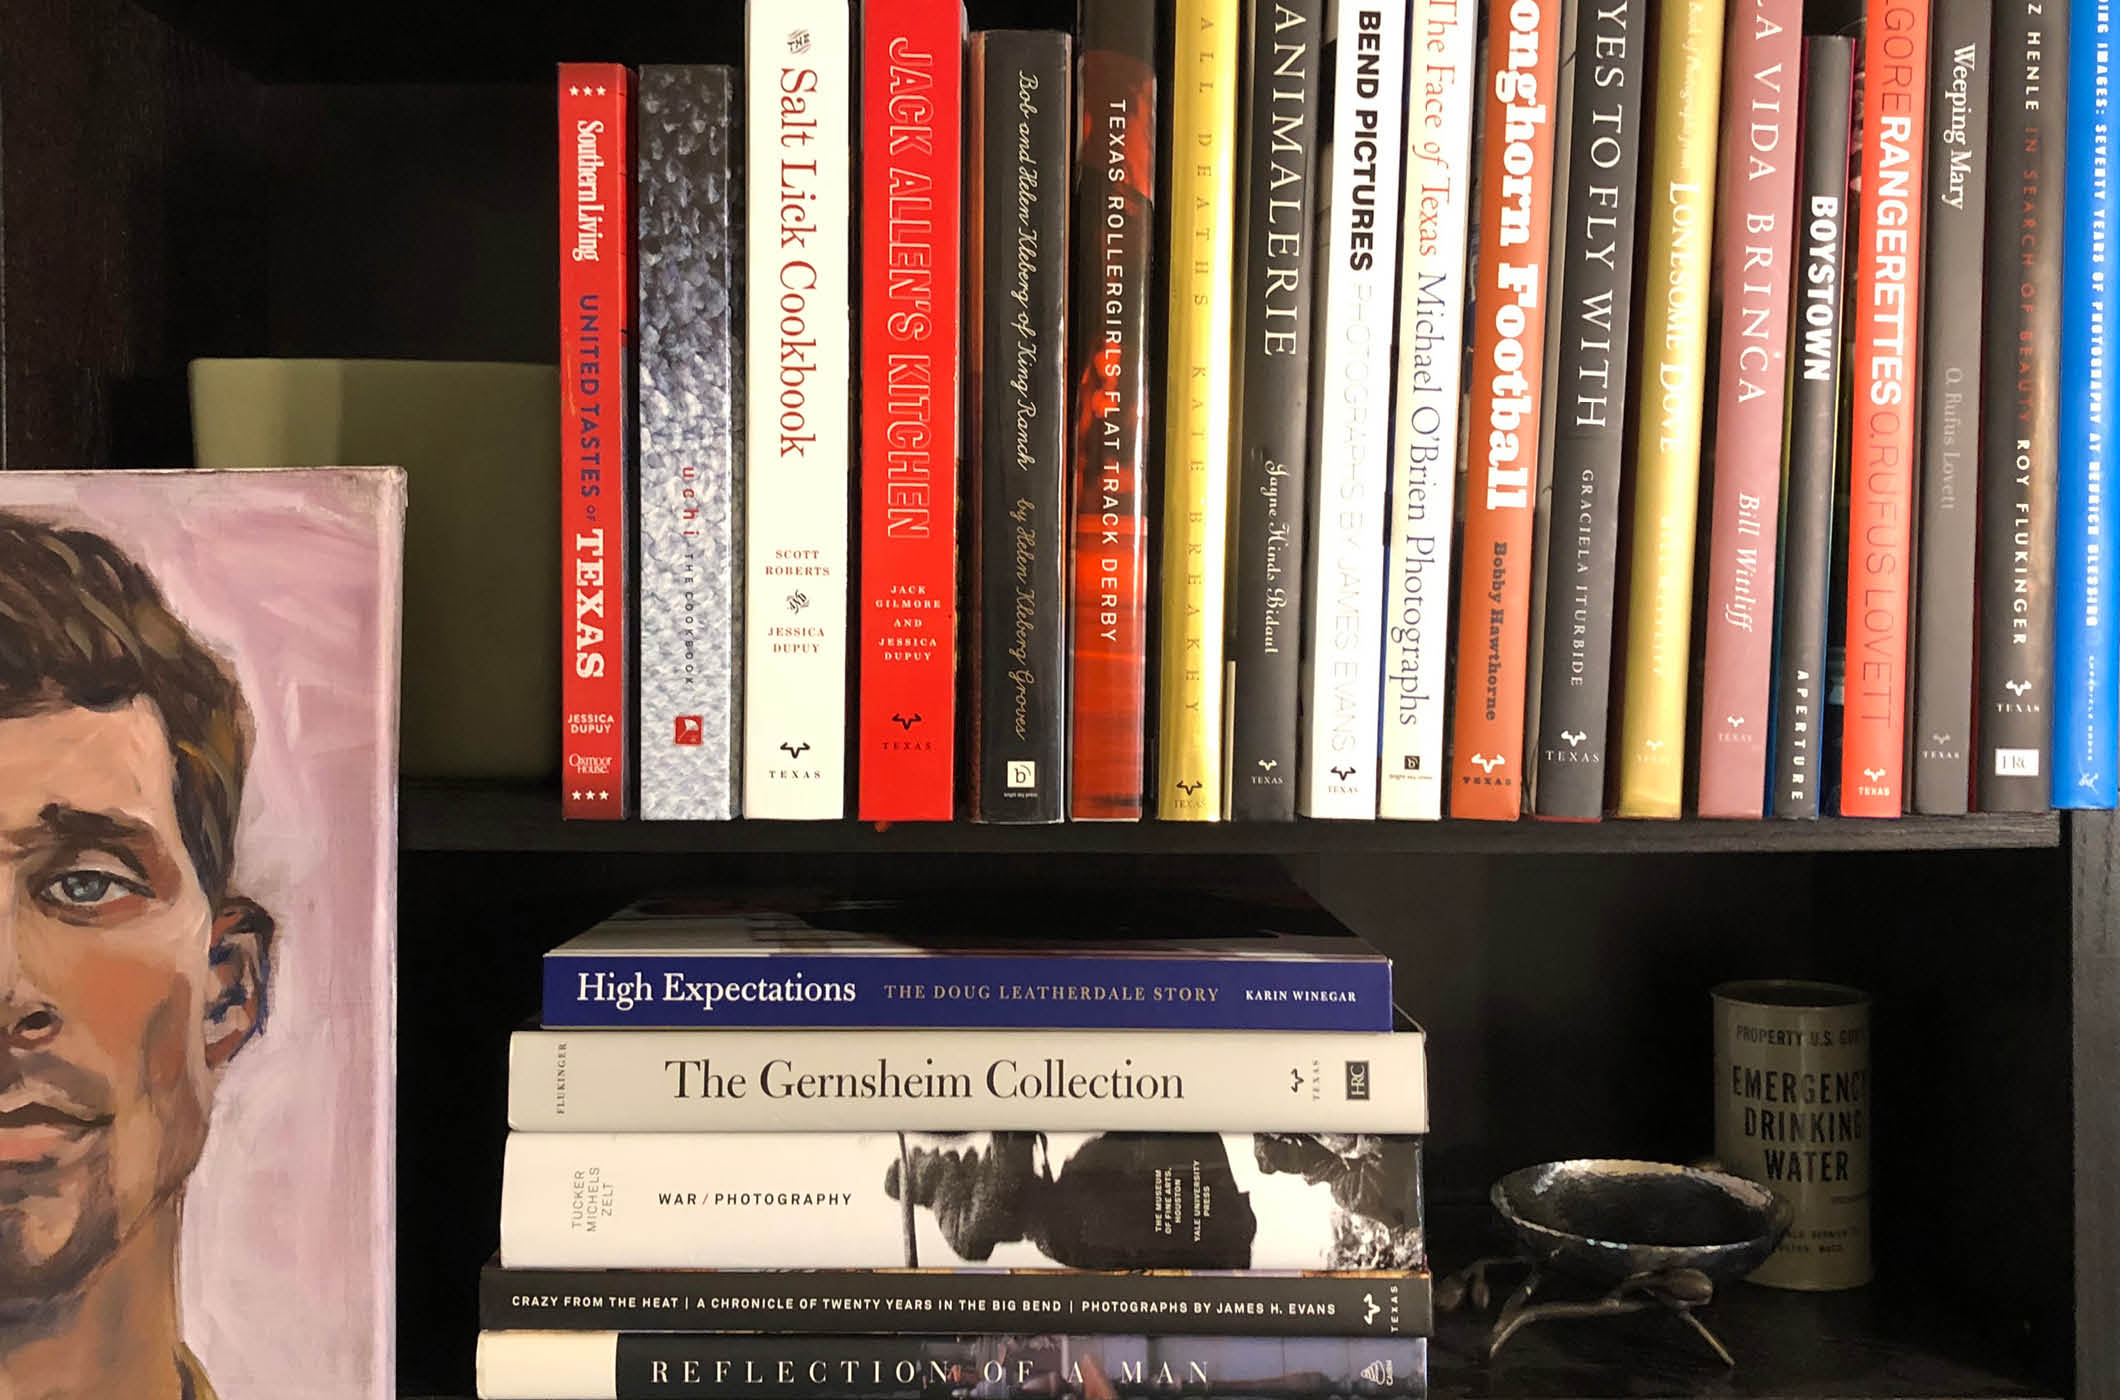 The Bookshelf